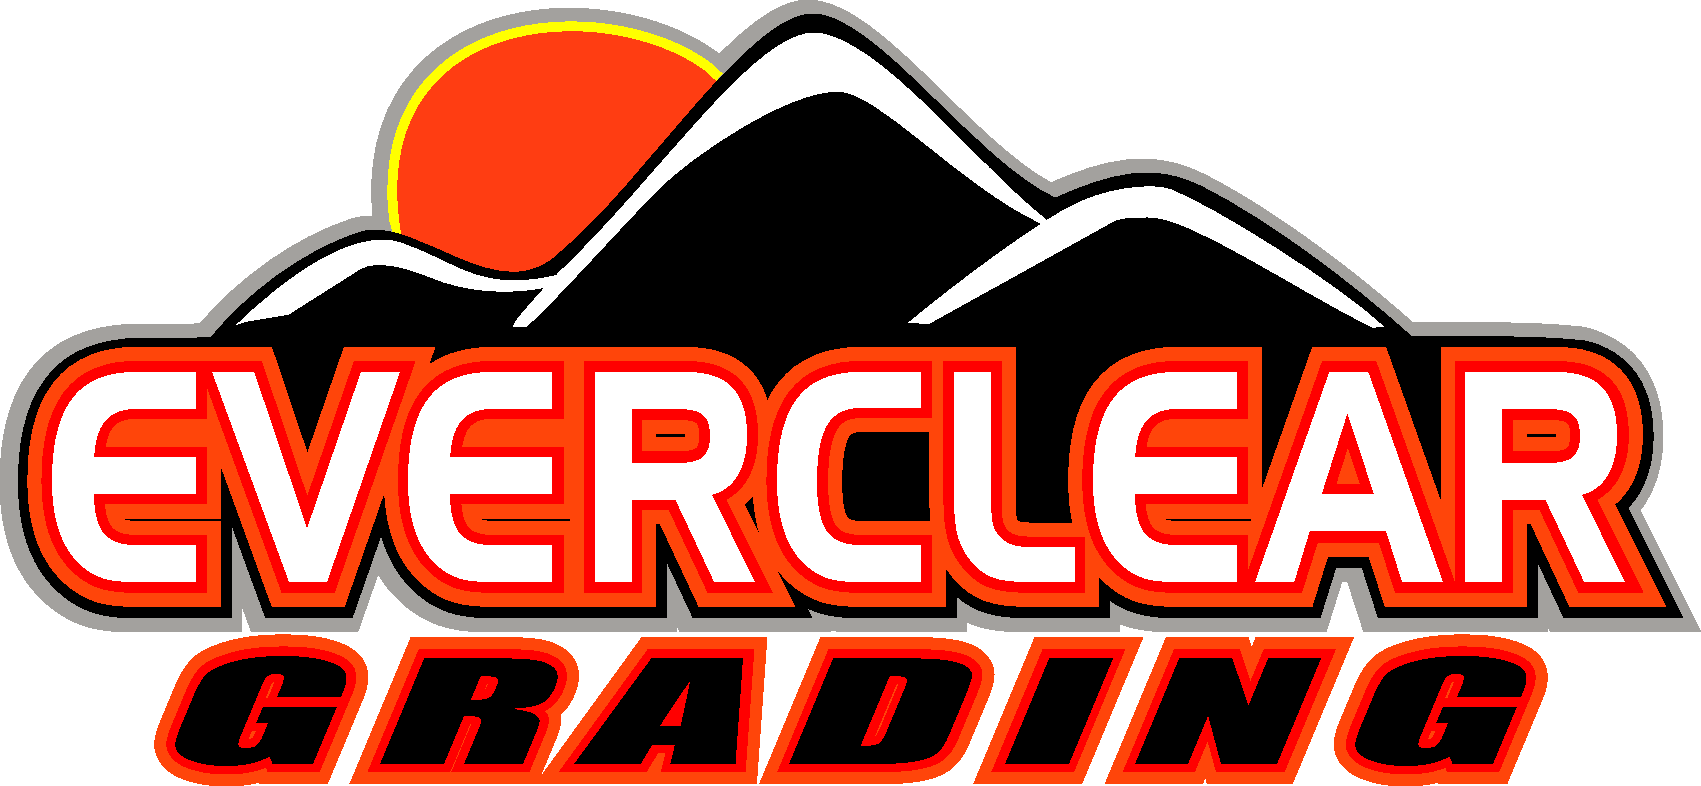 Everclear Logo - Everclear Grading. Powder Springs, GA 30127